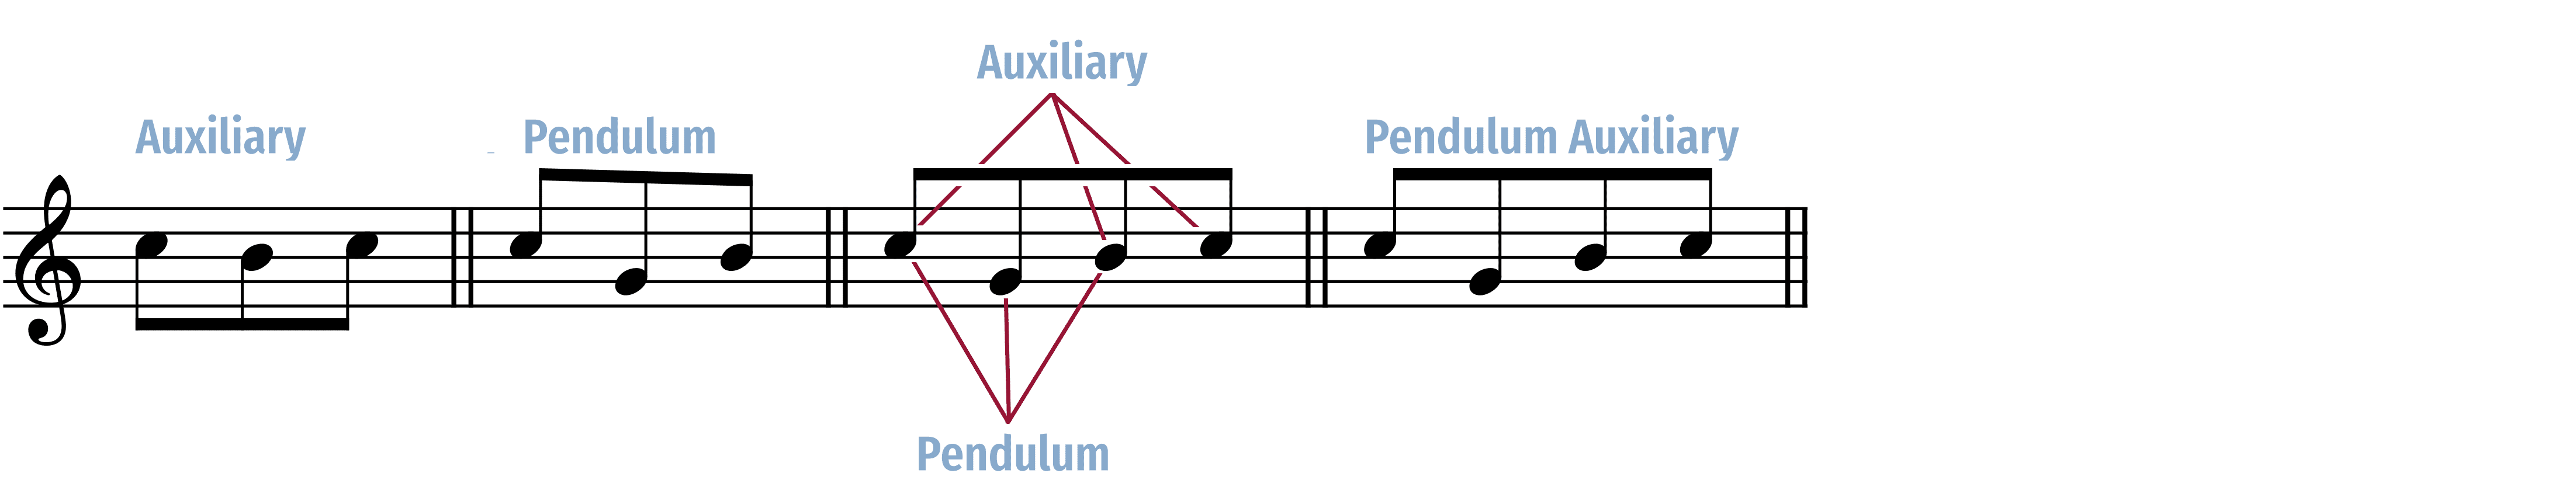 pendulum-auxiliary-illustration